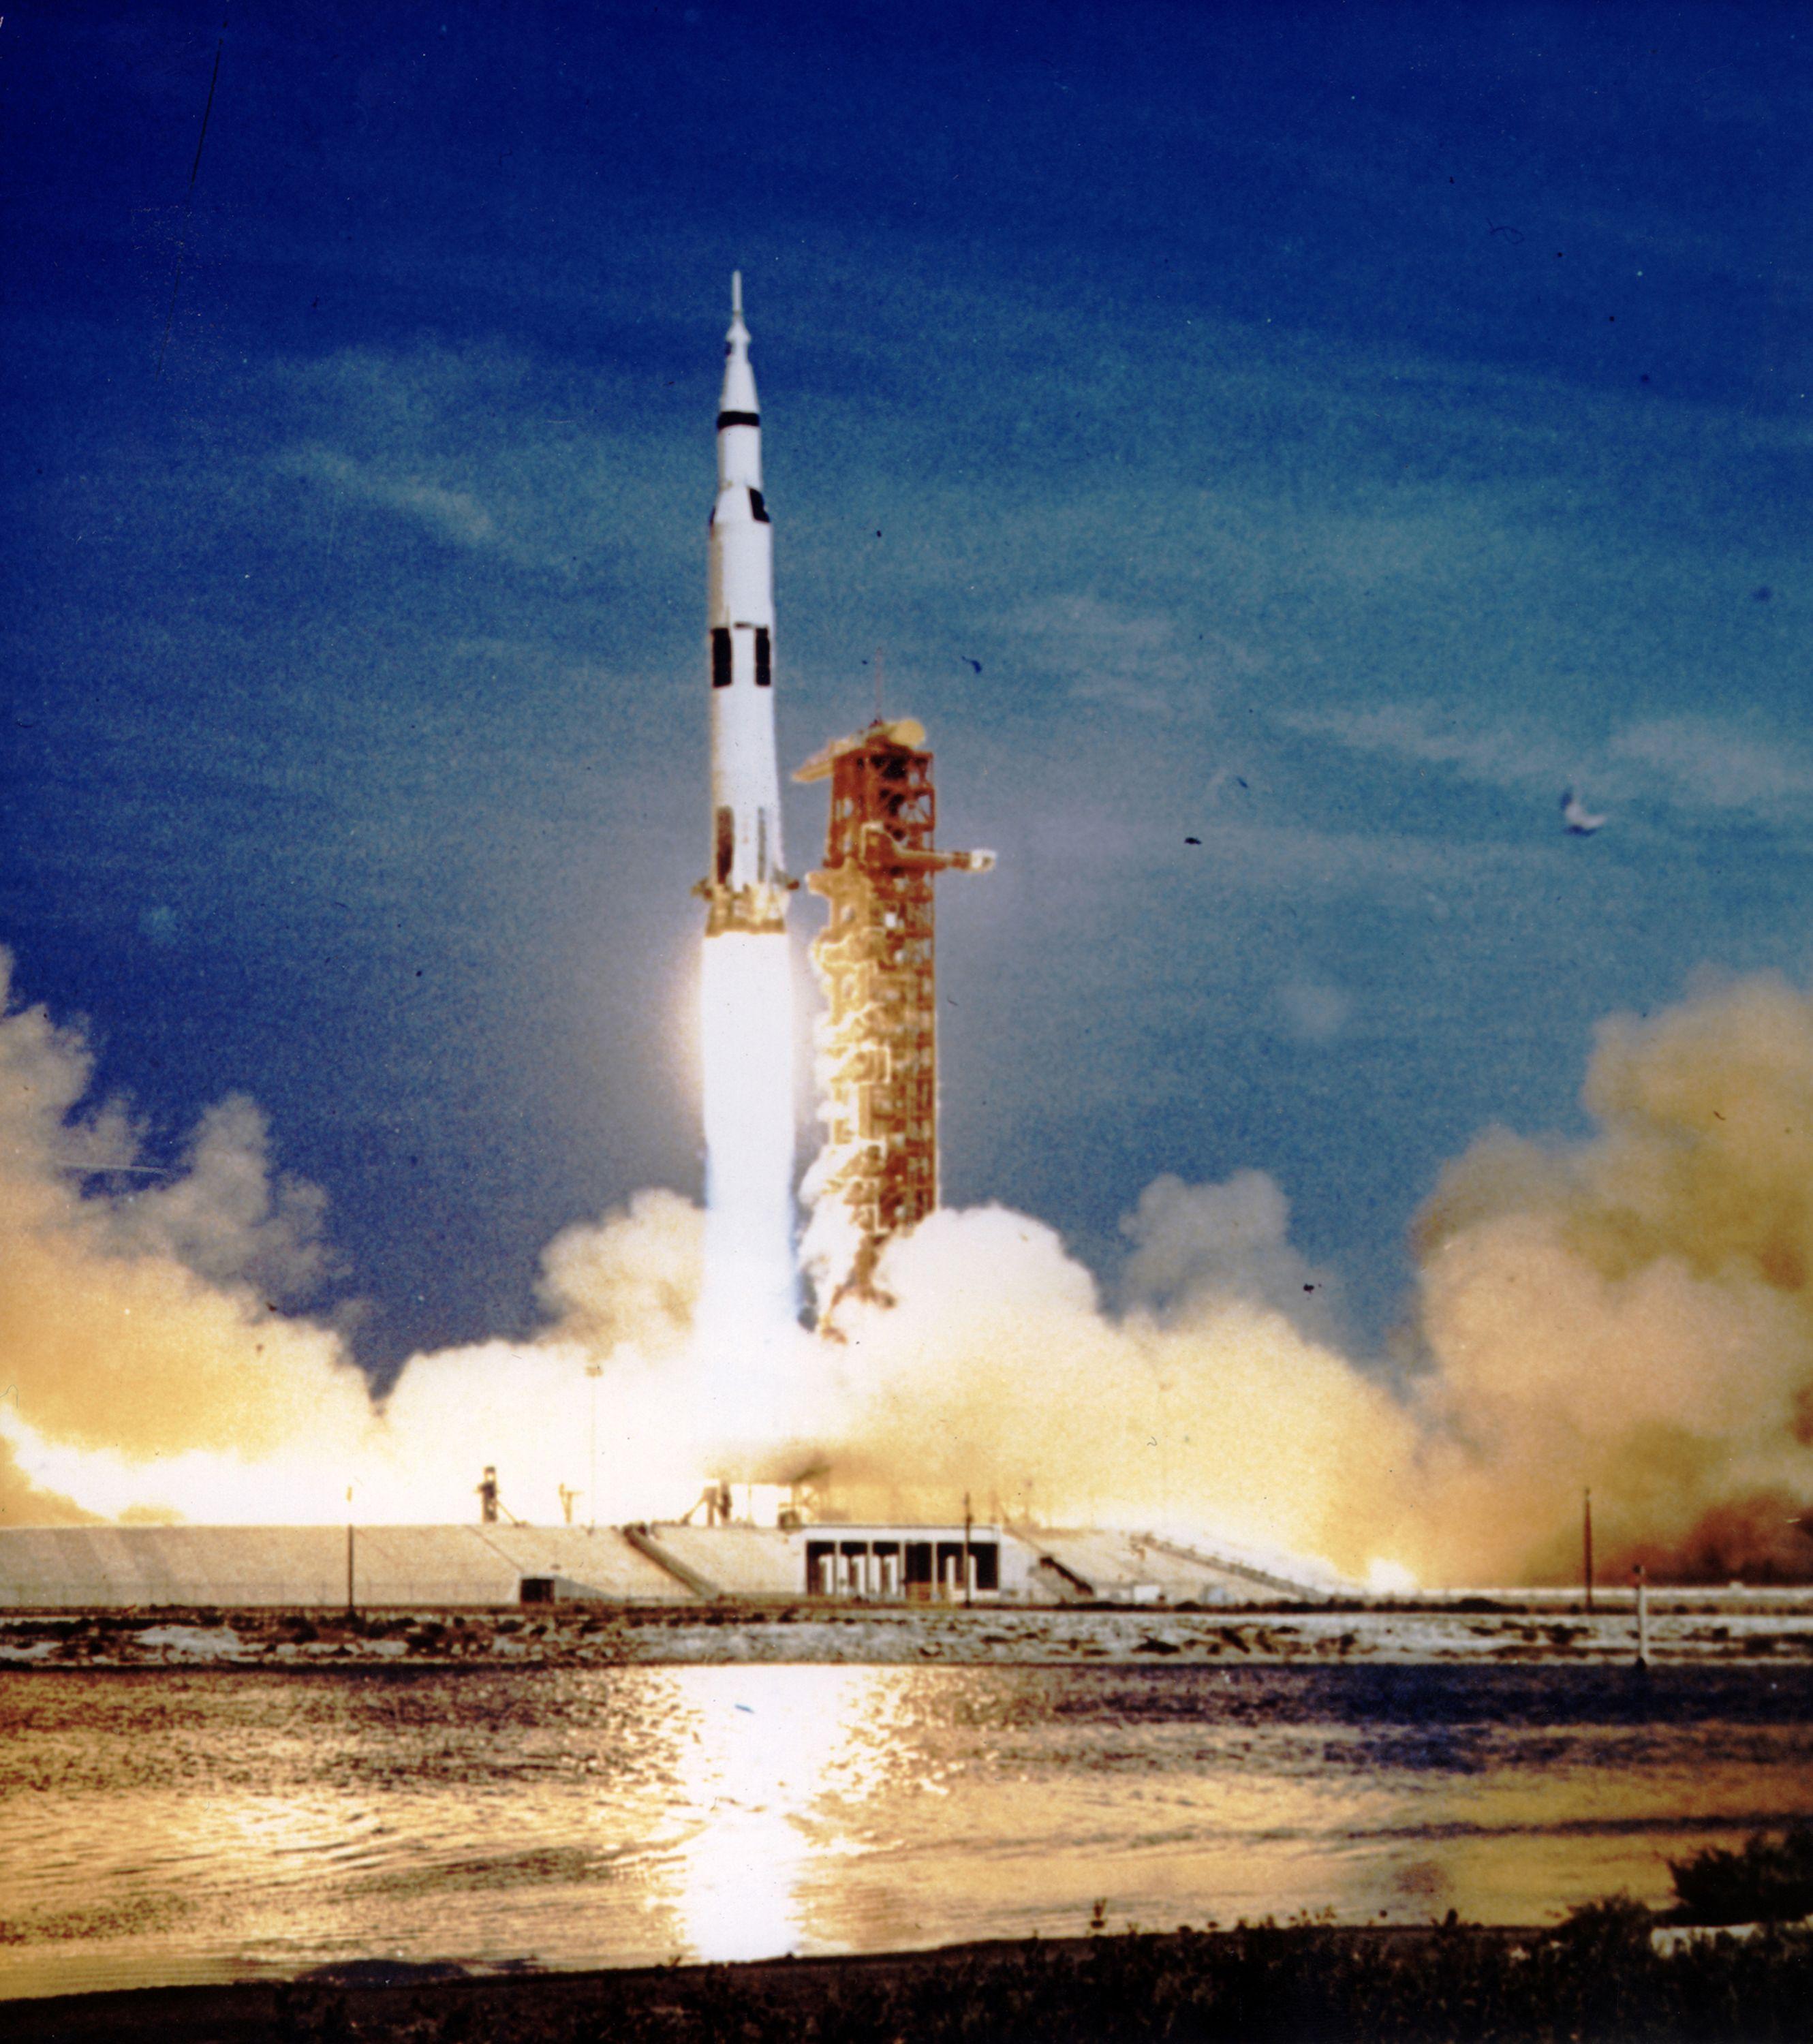 Saturn Apollo Program. NASA Image and Video Library